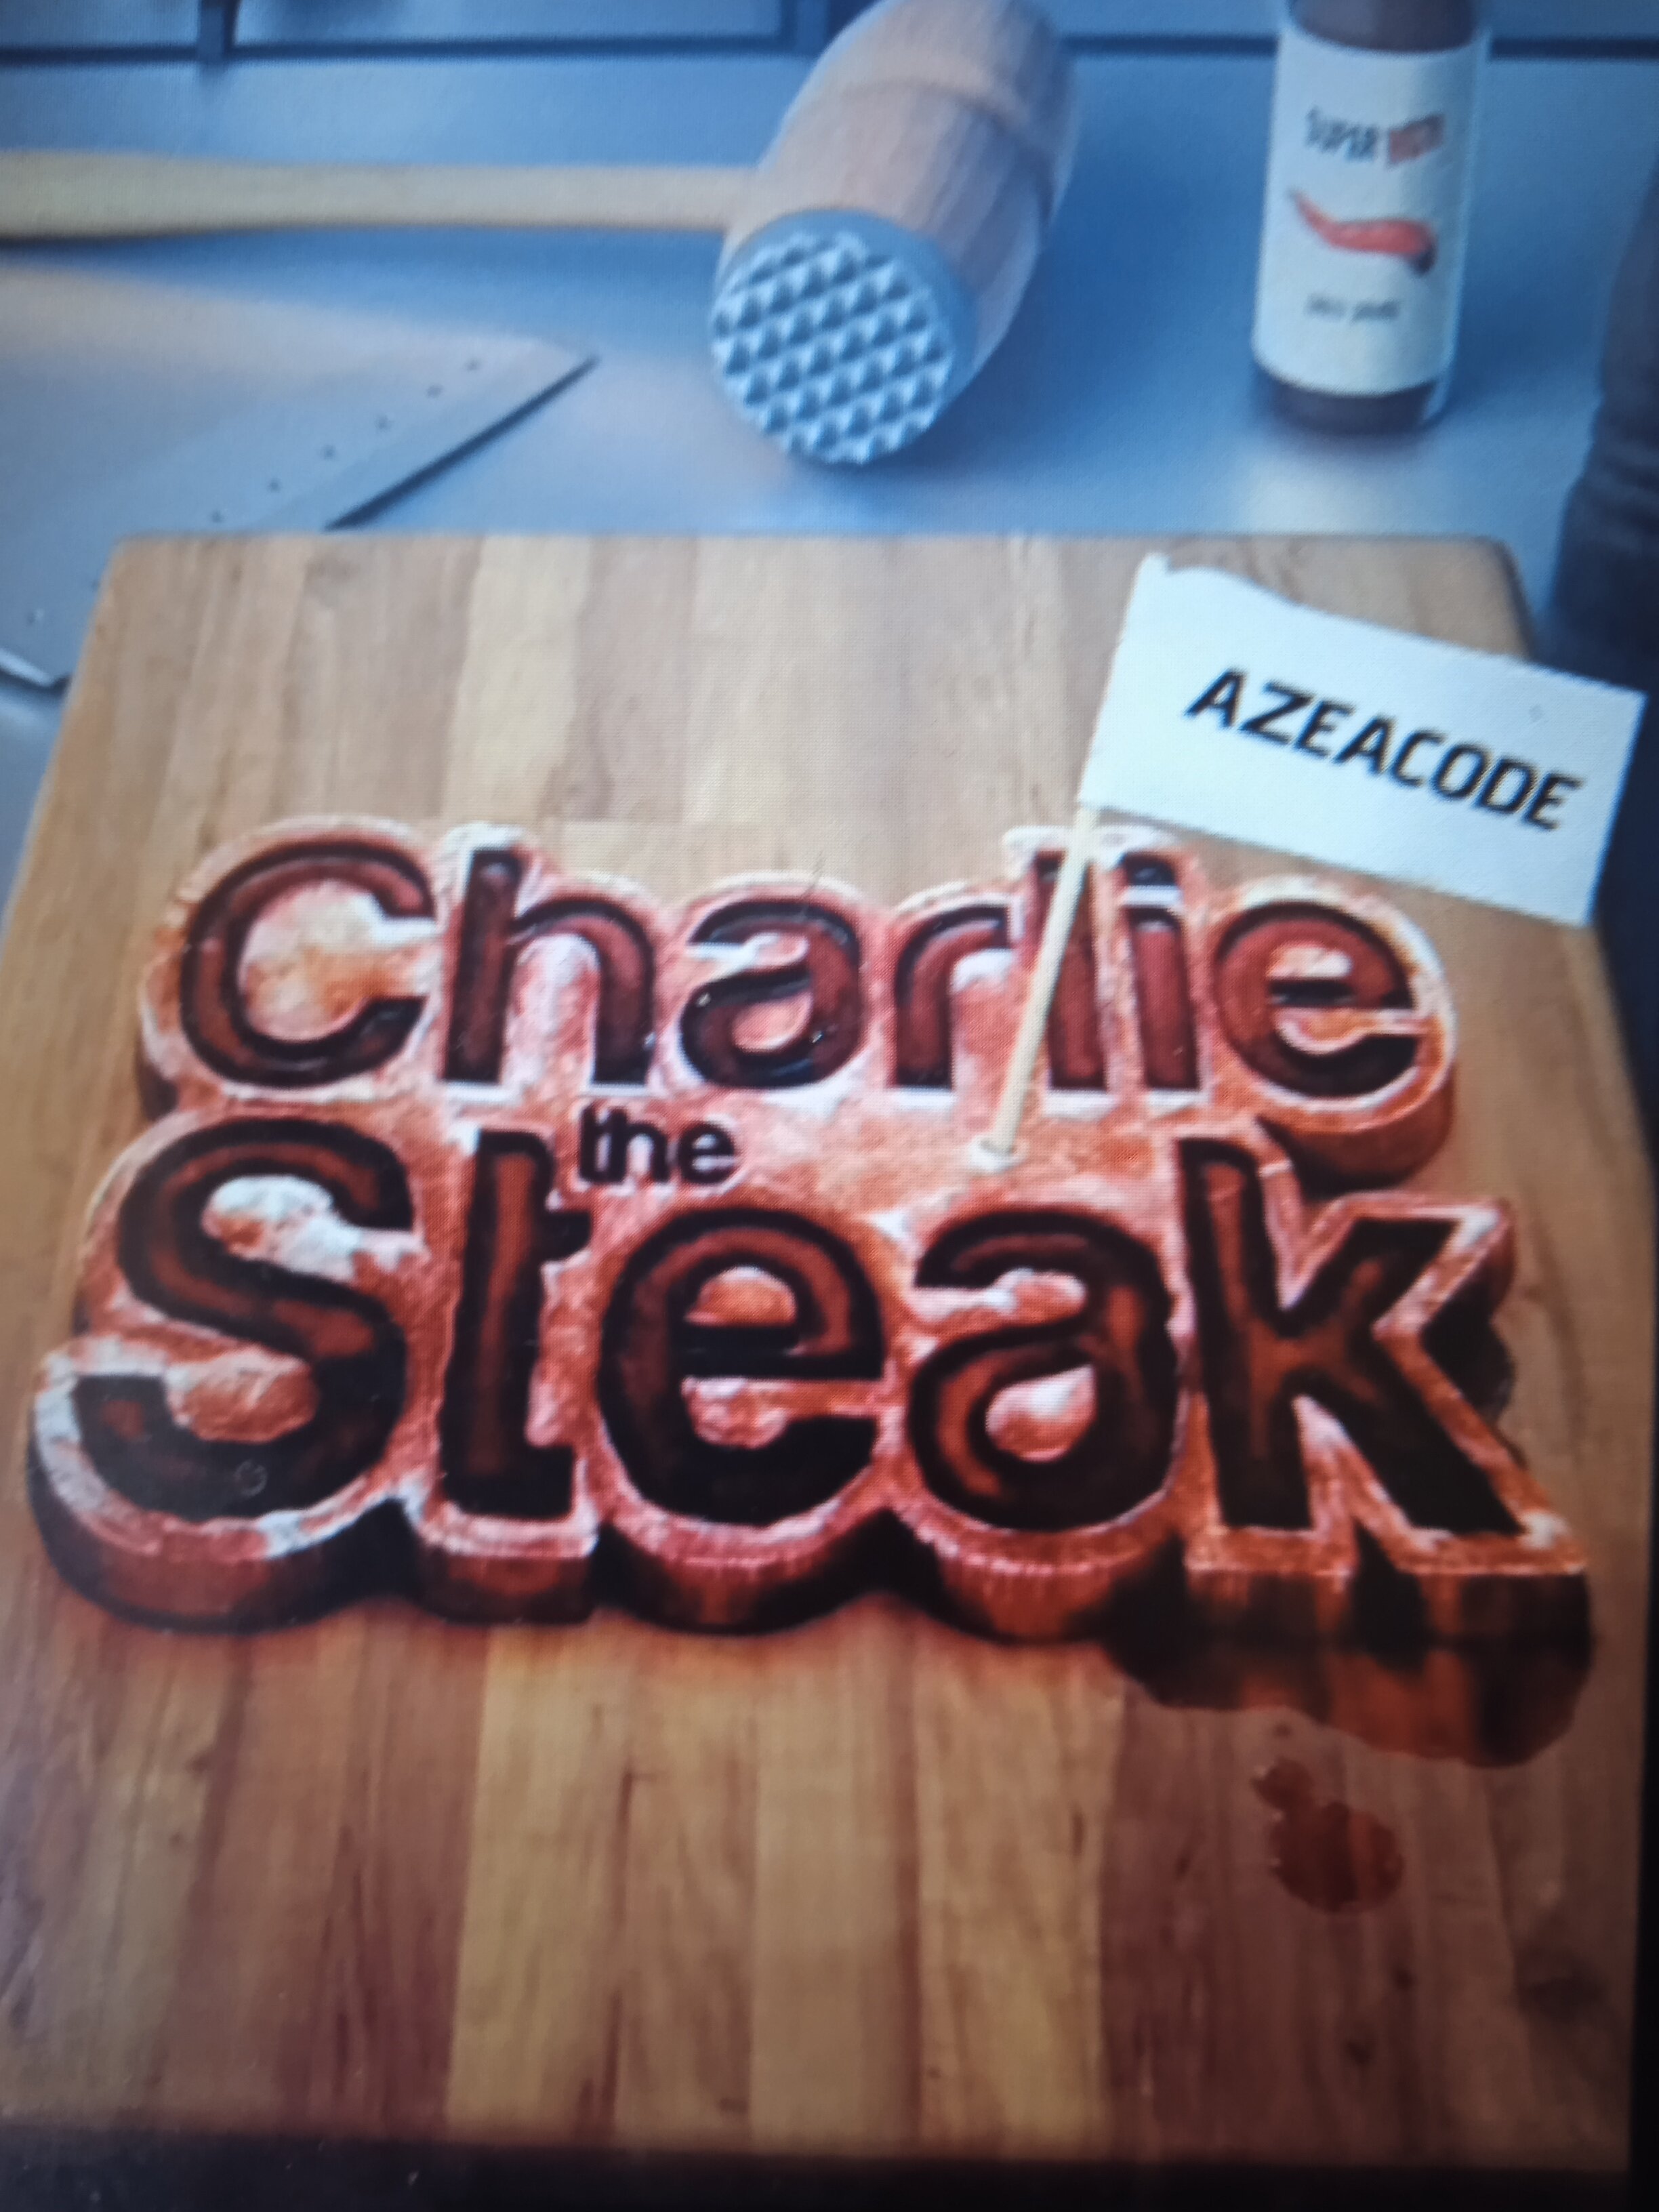 Charlie the Steak AZEACODE